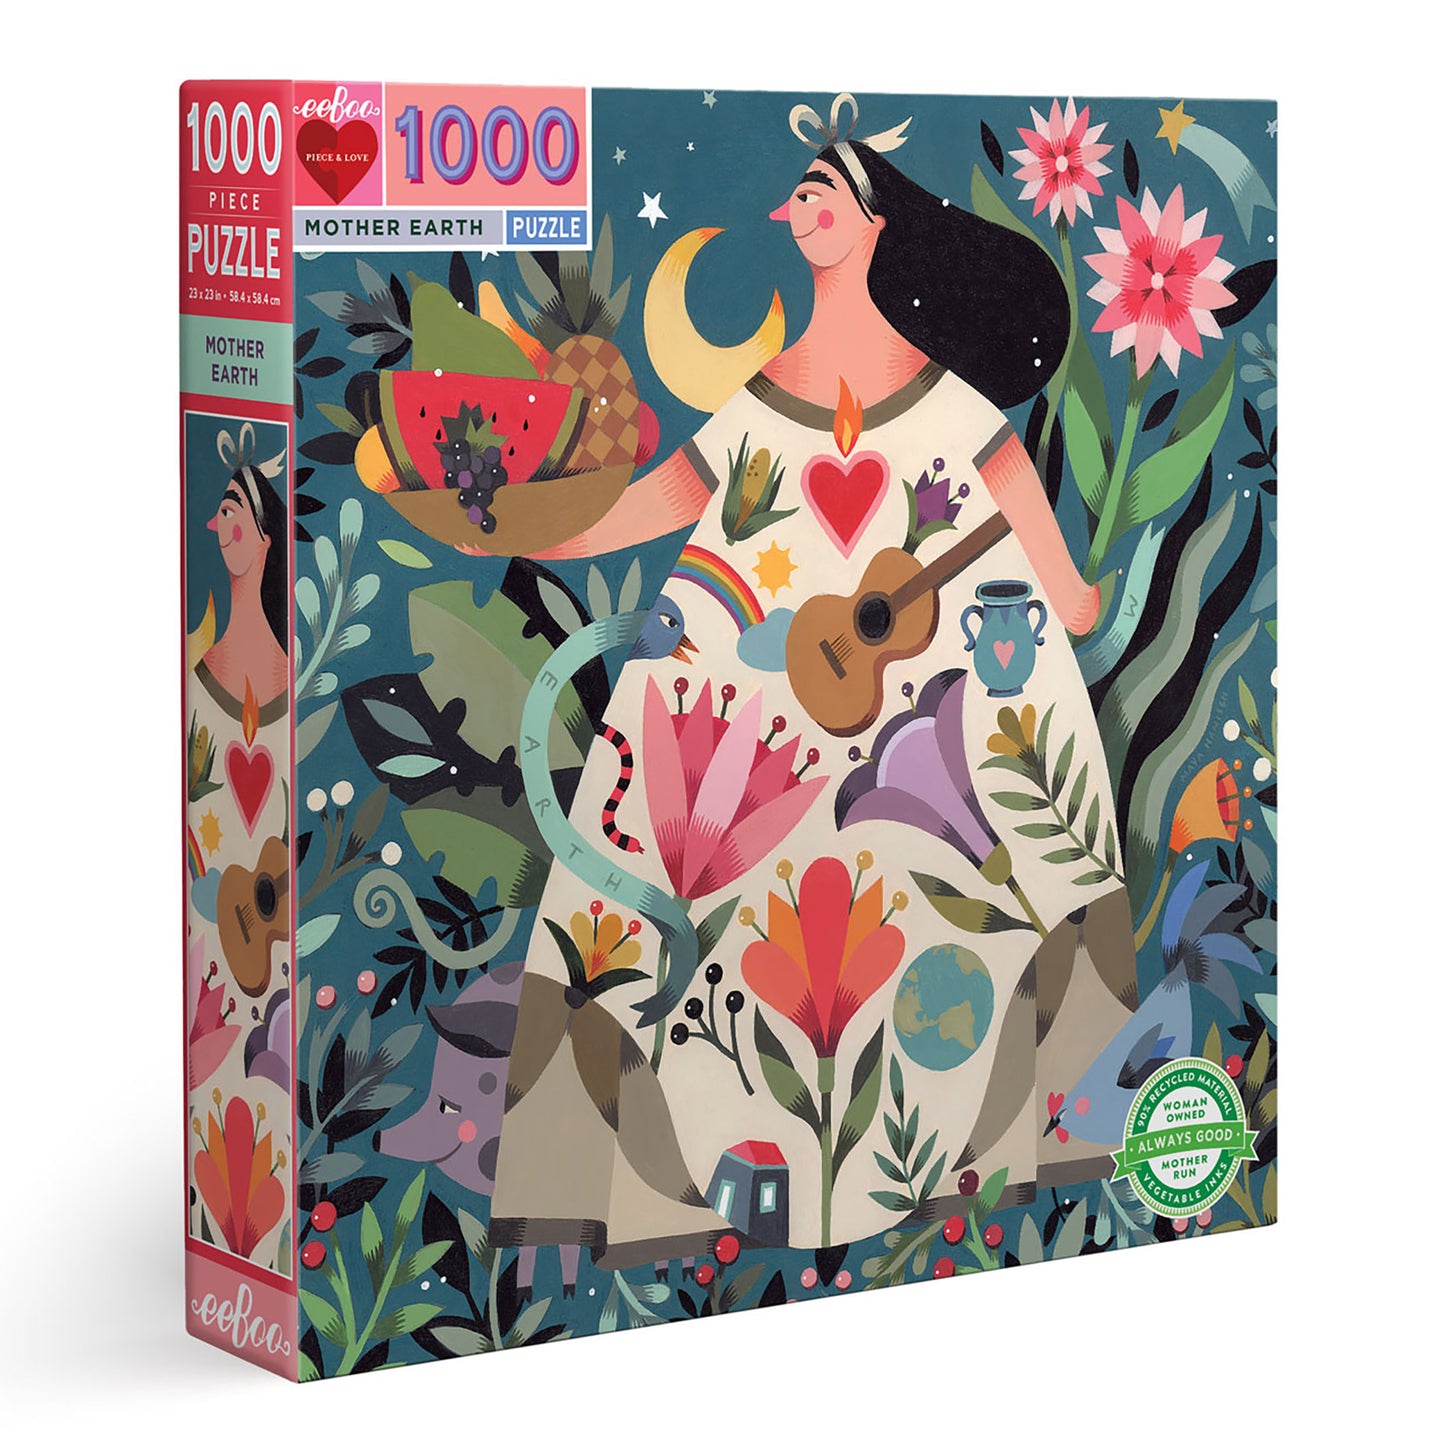 Mother Earth 1000 Piece Jigsaw Puzzle eeBoo Piece & Love | Gifts for Mom Grandma Wife Women